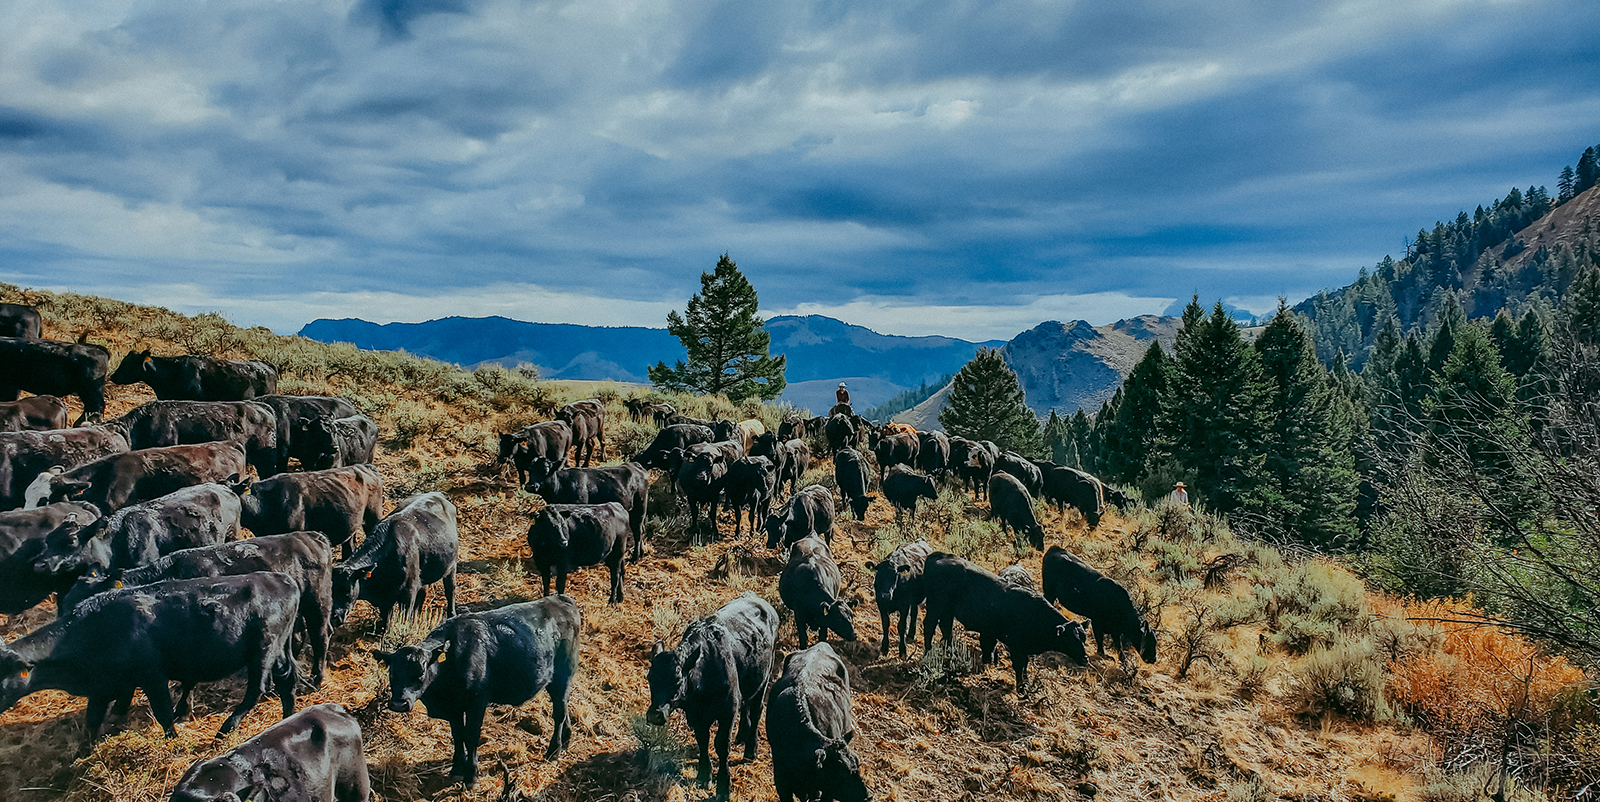 Range riders herding cattle